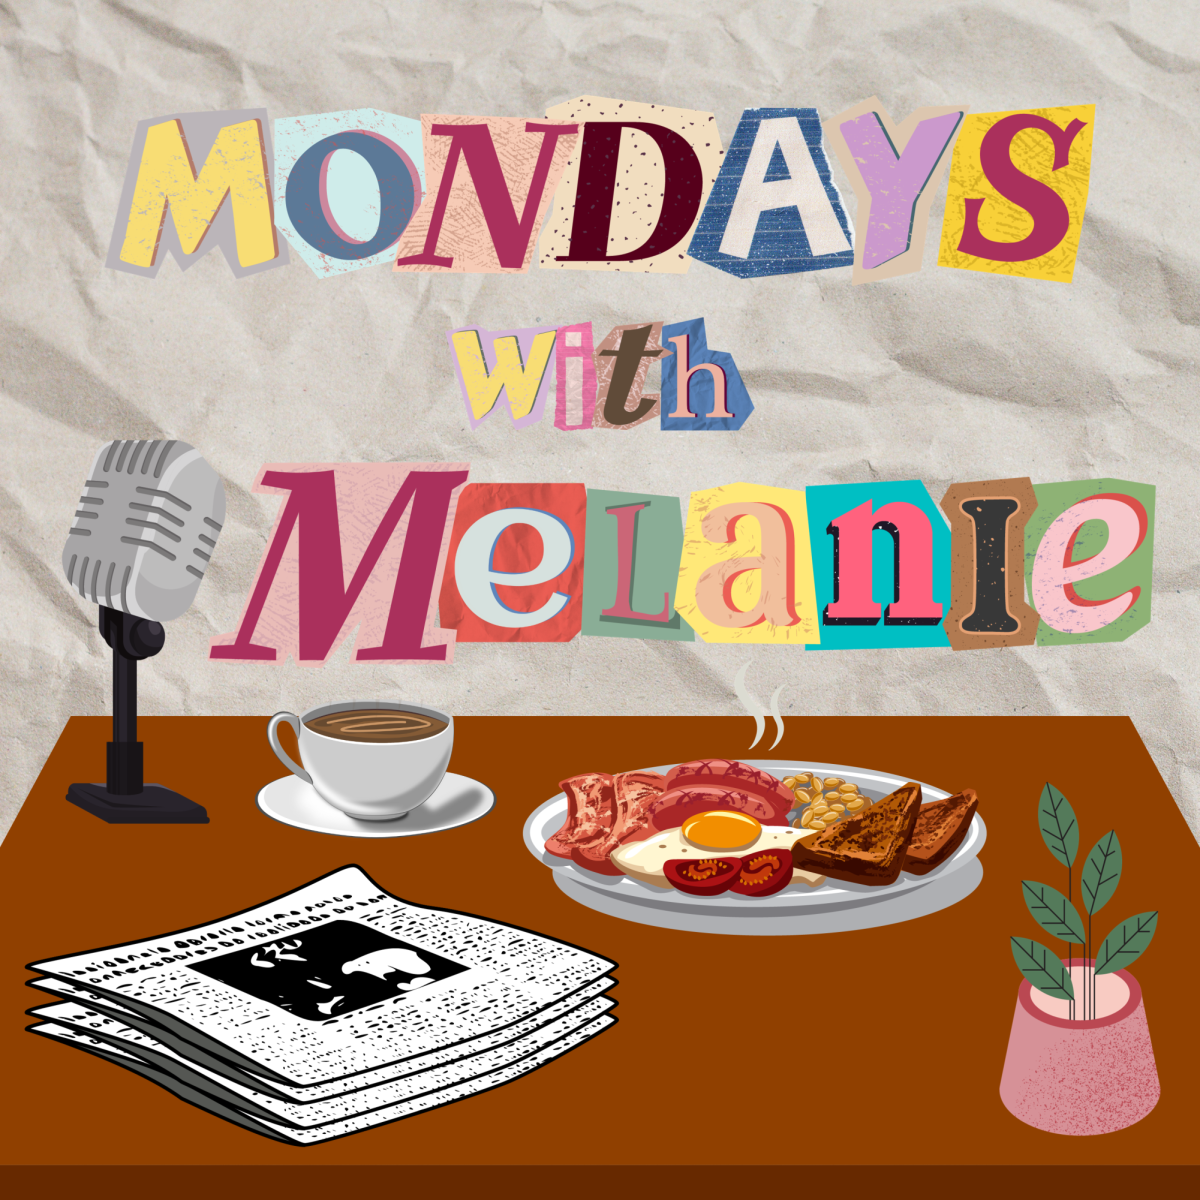 Mondays with Melanie: On Kara Swisher, Menstrual Drives and Georgetown Basketball